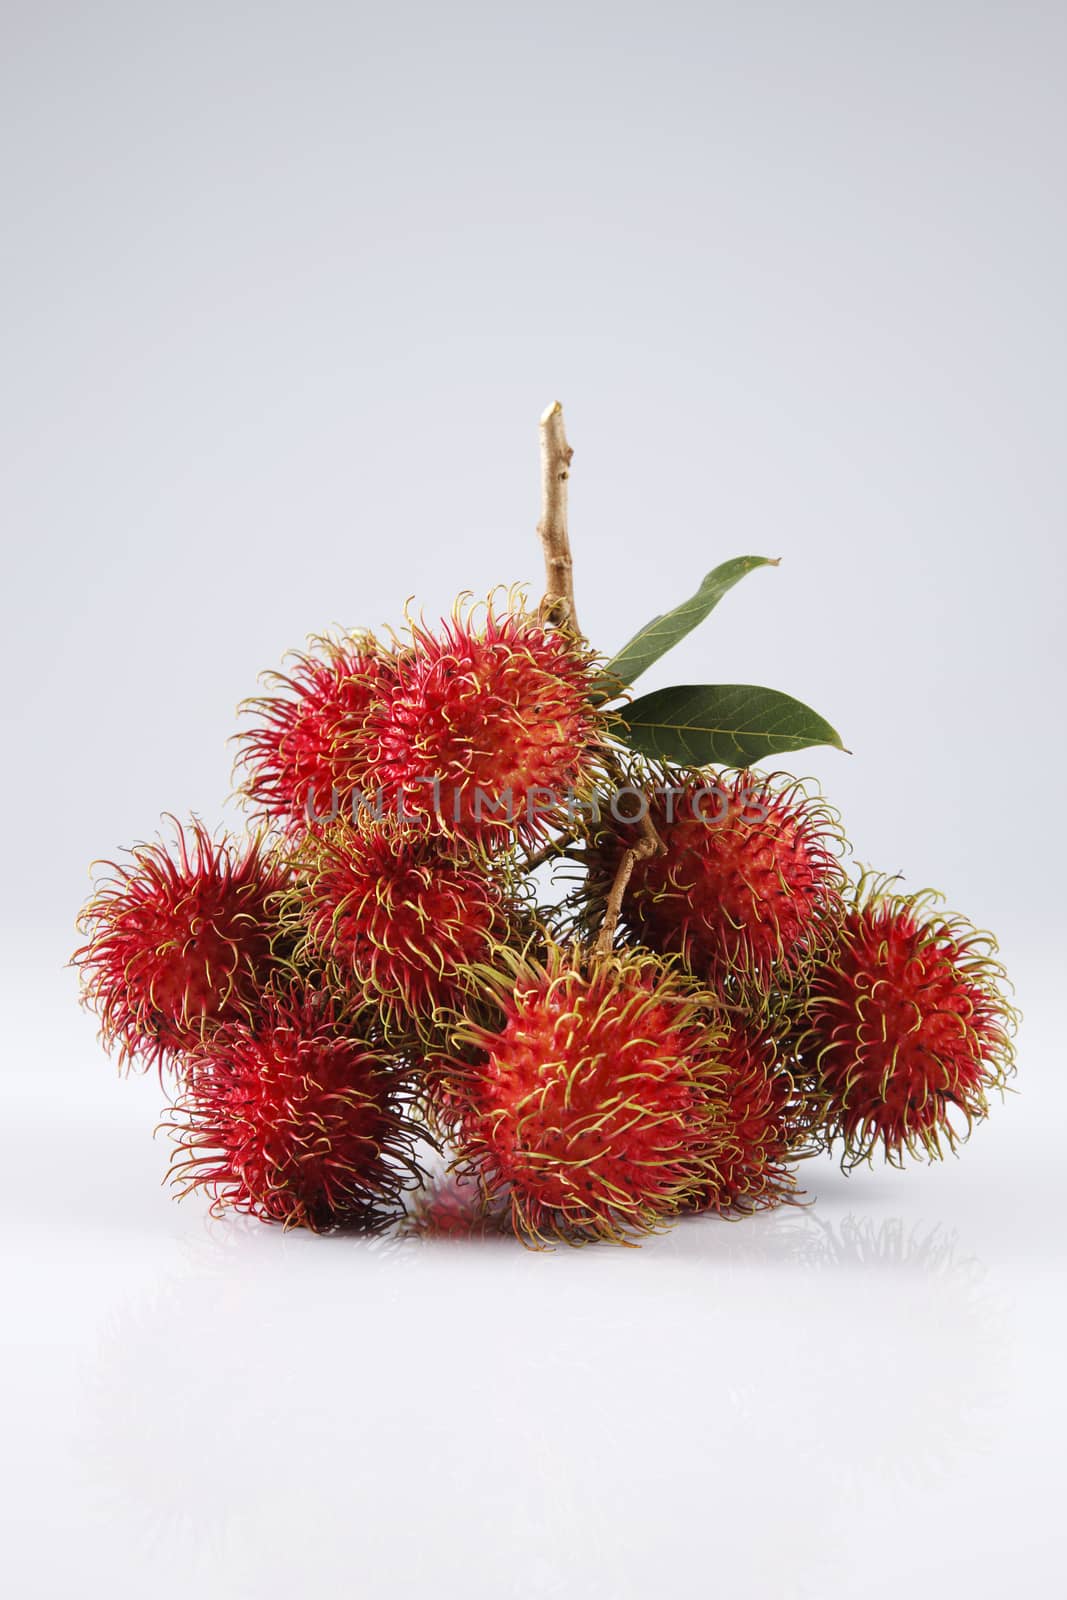 asian fruit rambutan on the plain background